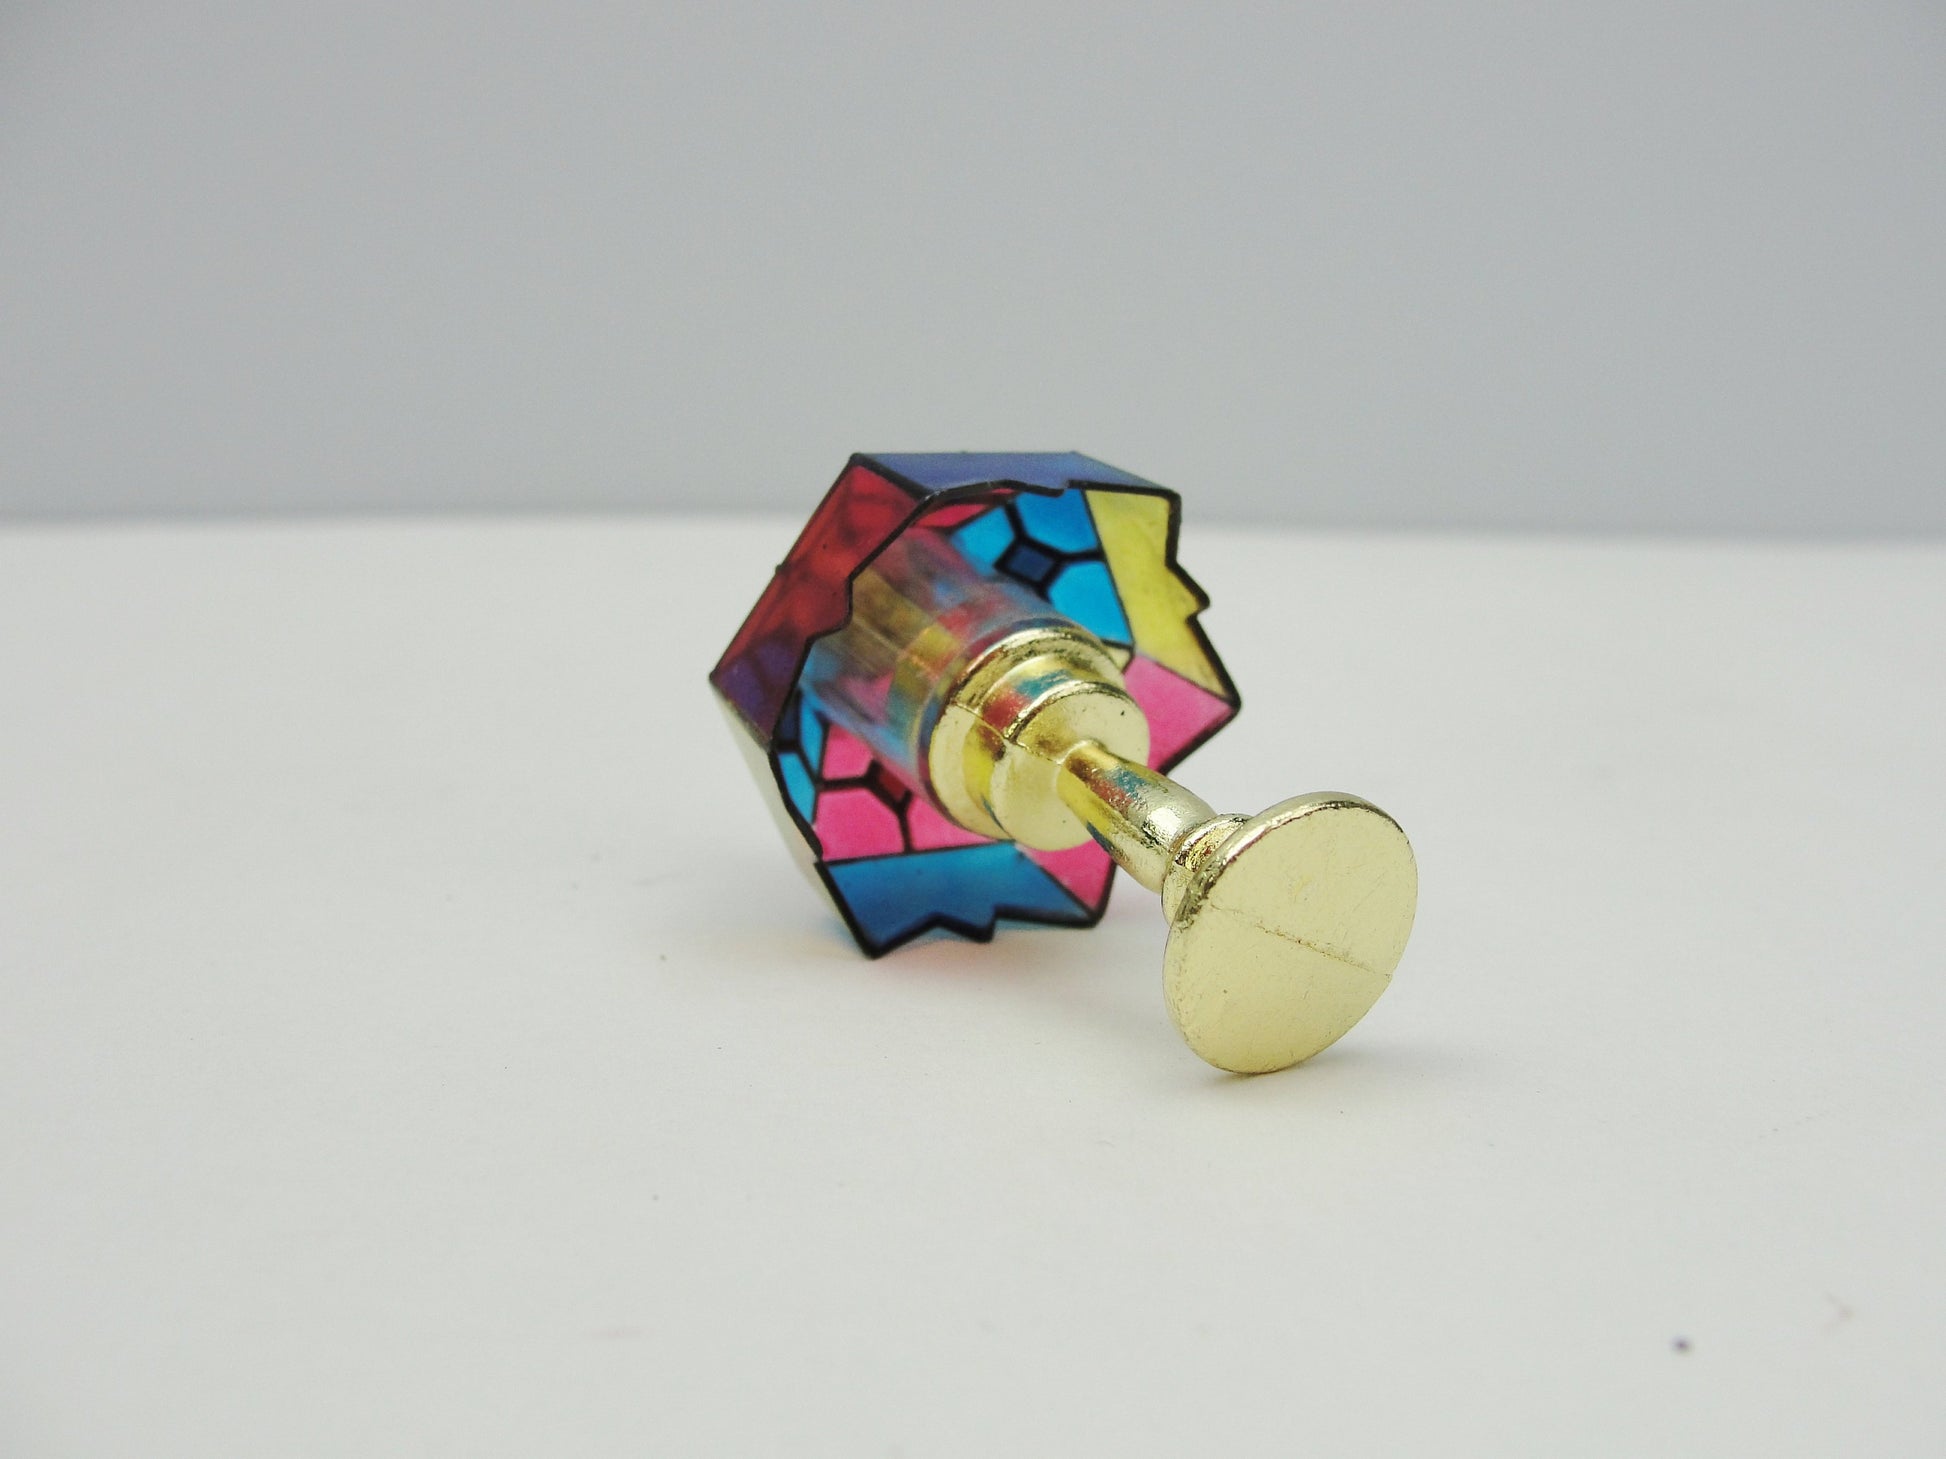 Dollhouse miniature tiffany lamp - Miniatures - Craft Supply House